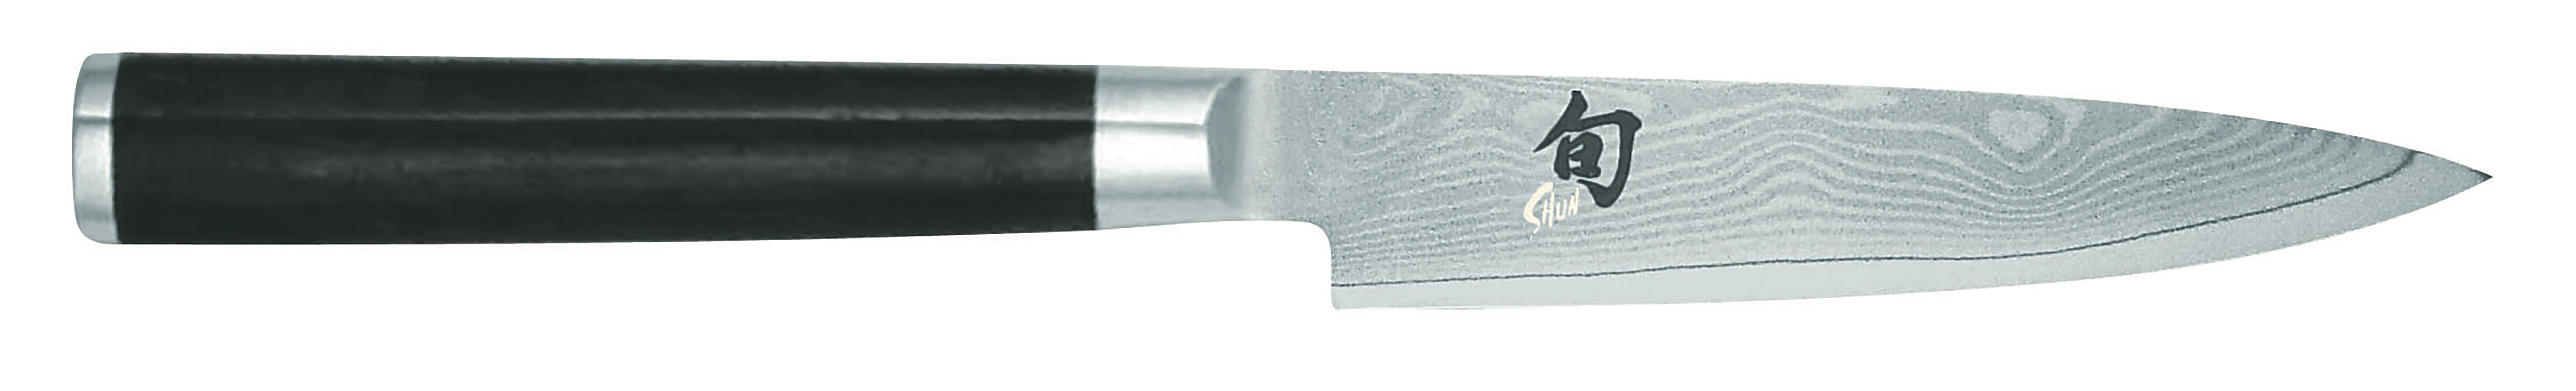 KAI SHUN CLASSIC Allzweckmesser 10cm